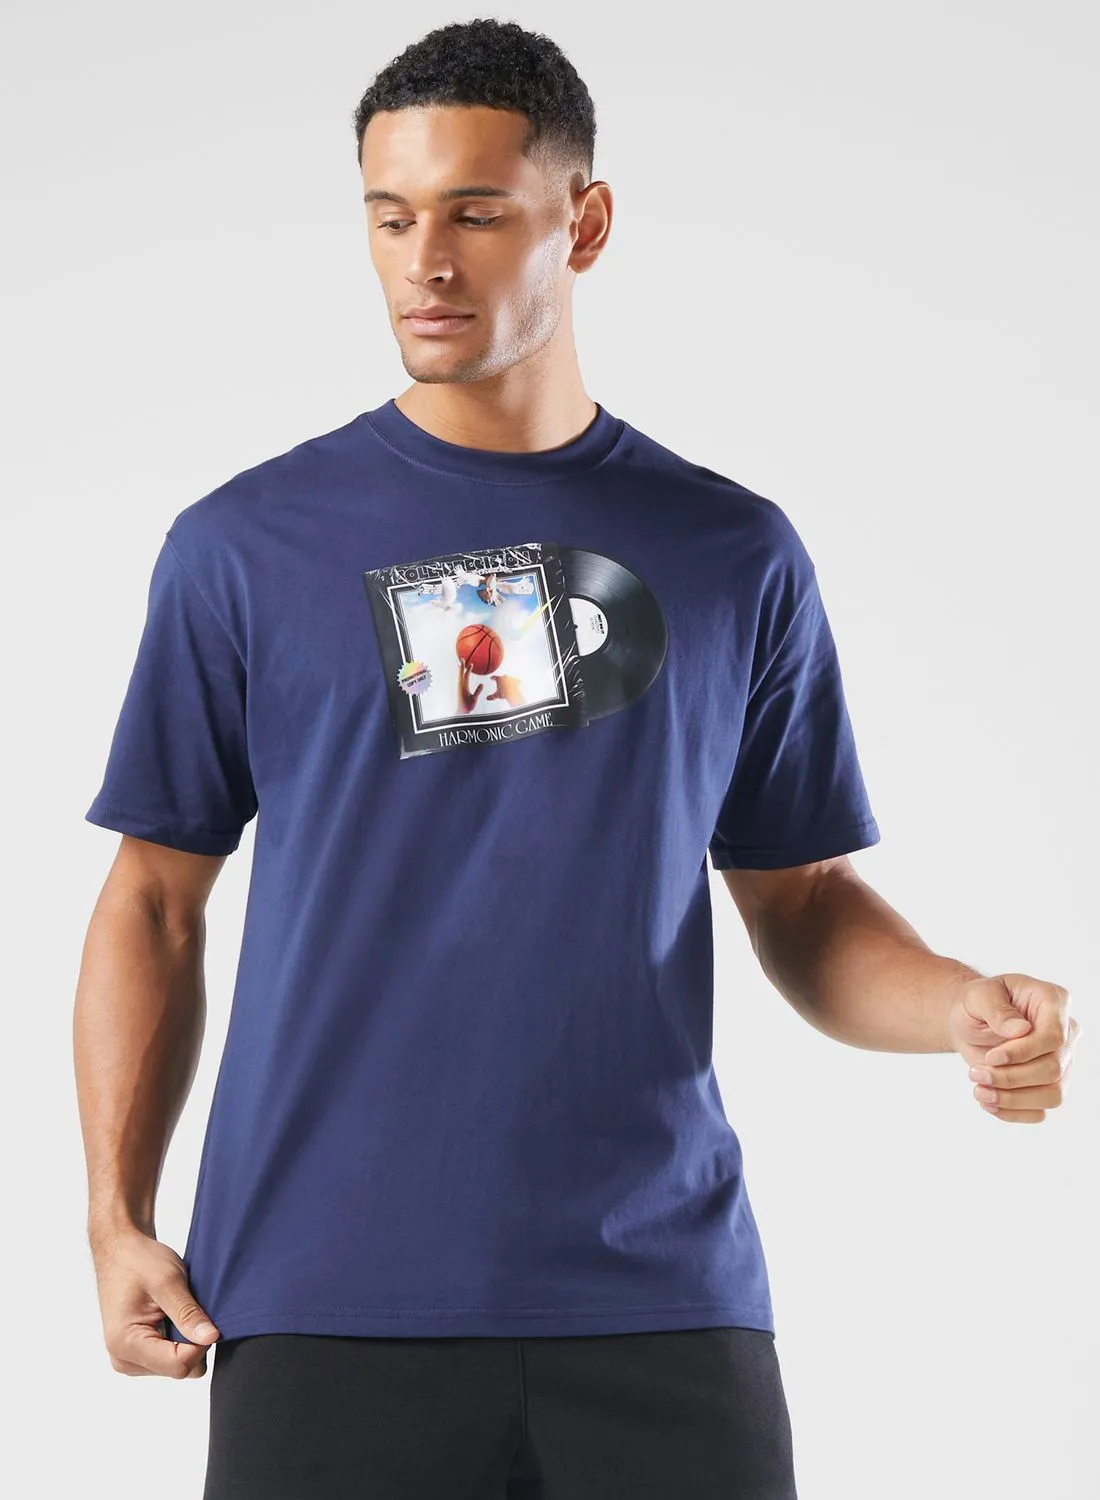 Nike Logo M90 Sp24 T-Shirt